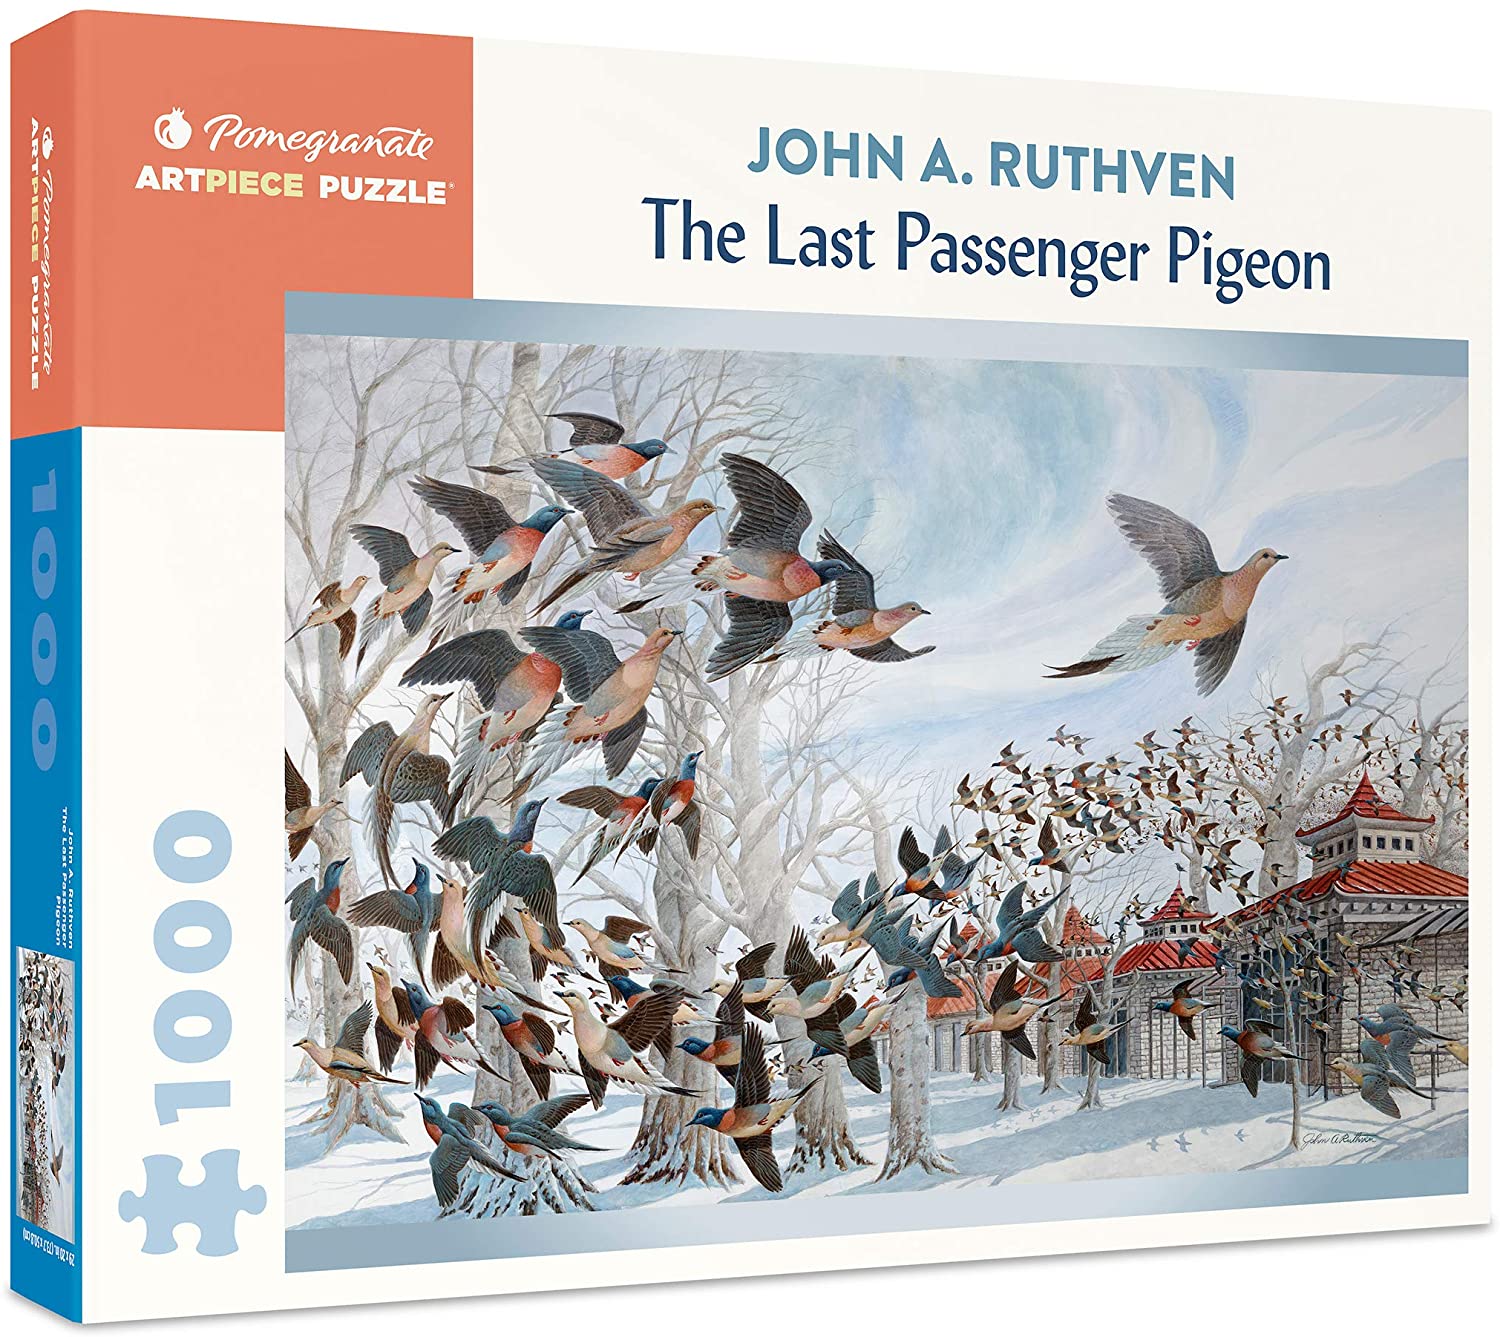 The Last Passenger Pigeon